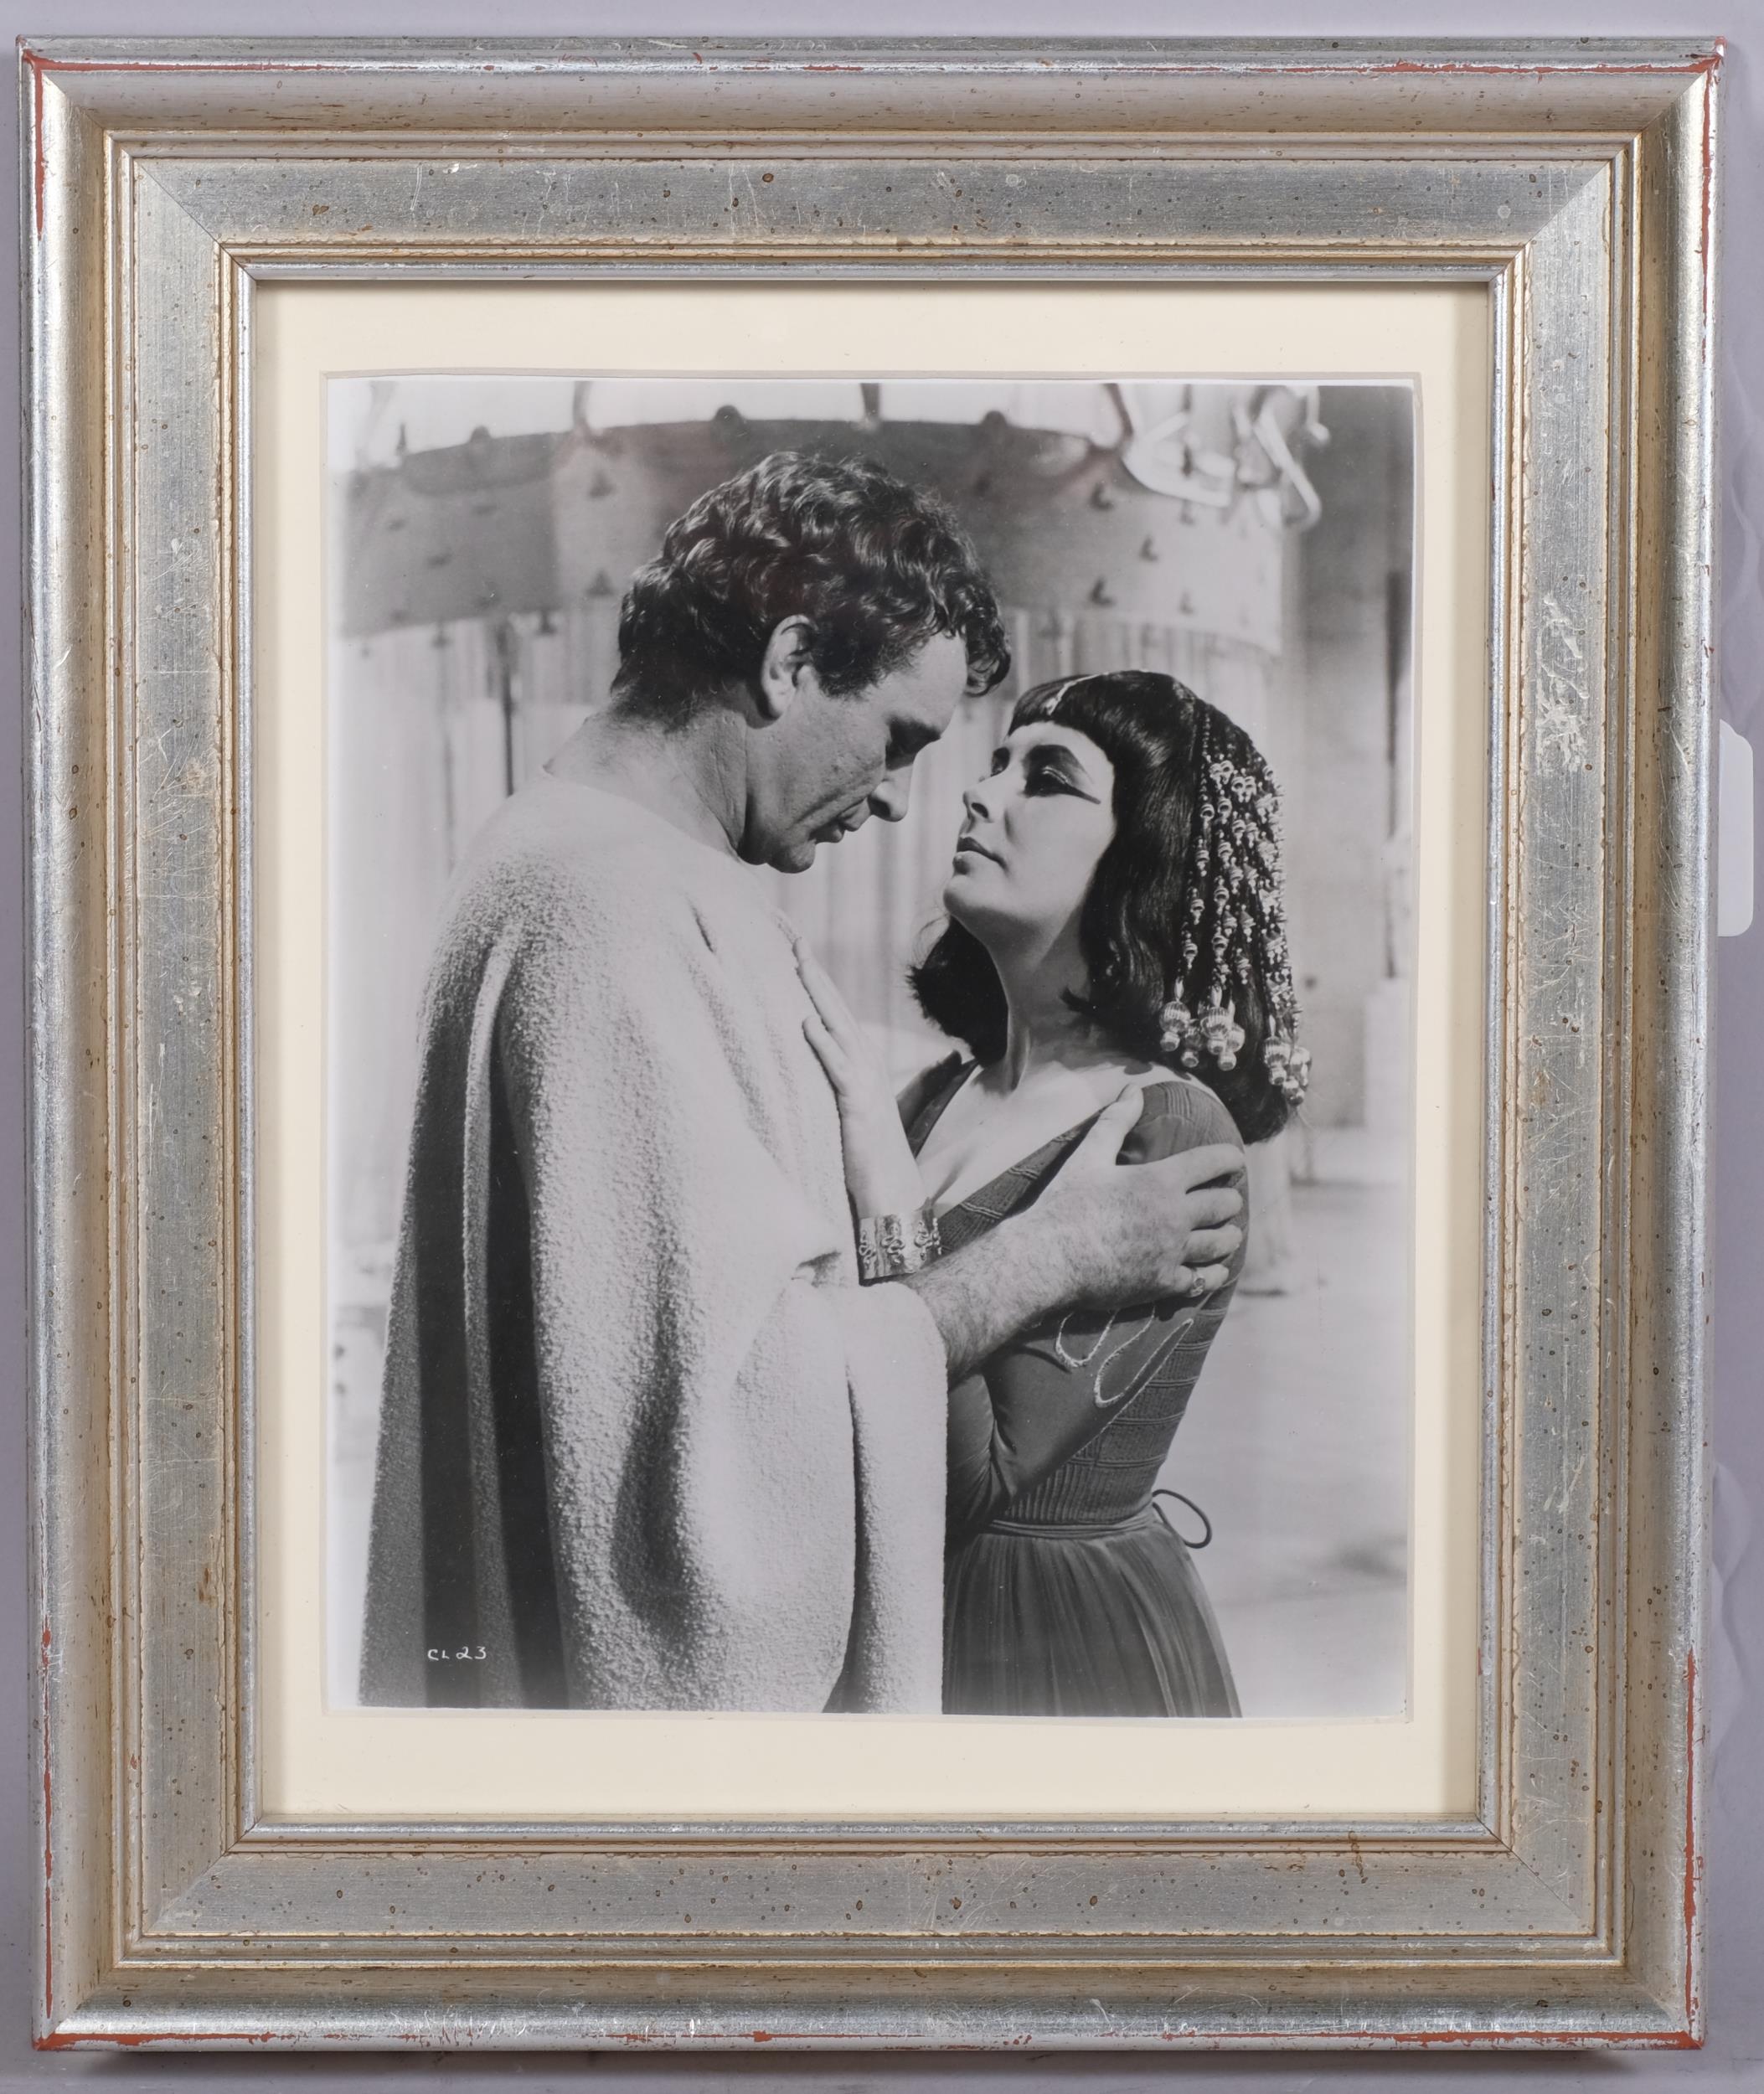 Original vintage silver gelatin photograph, Elizabeth Taylor and Richard Burton from the set of